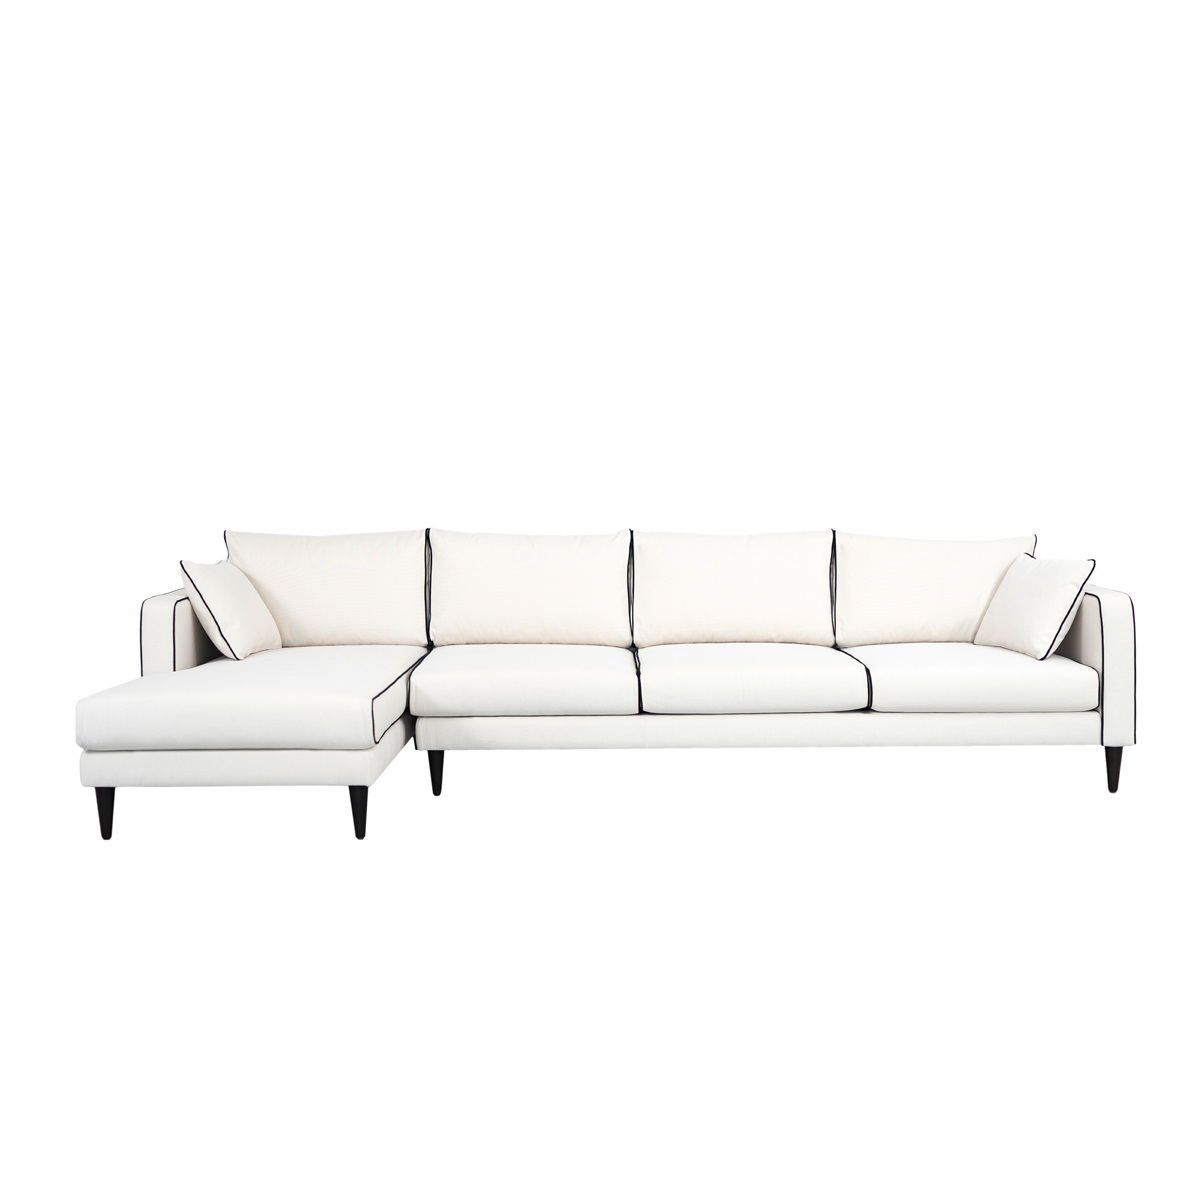 Noa corner sofa - Left angle, Different sizes - Cotton - image 1